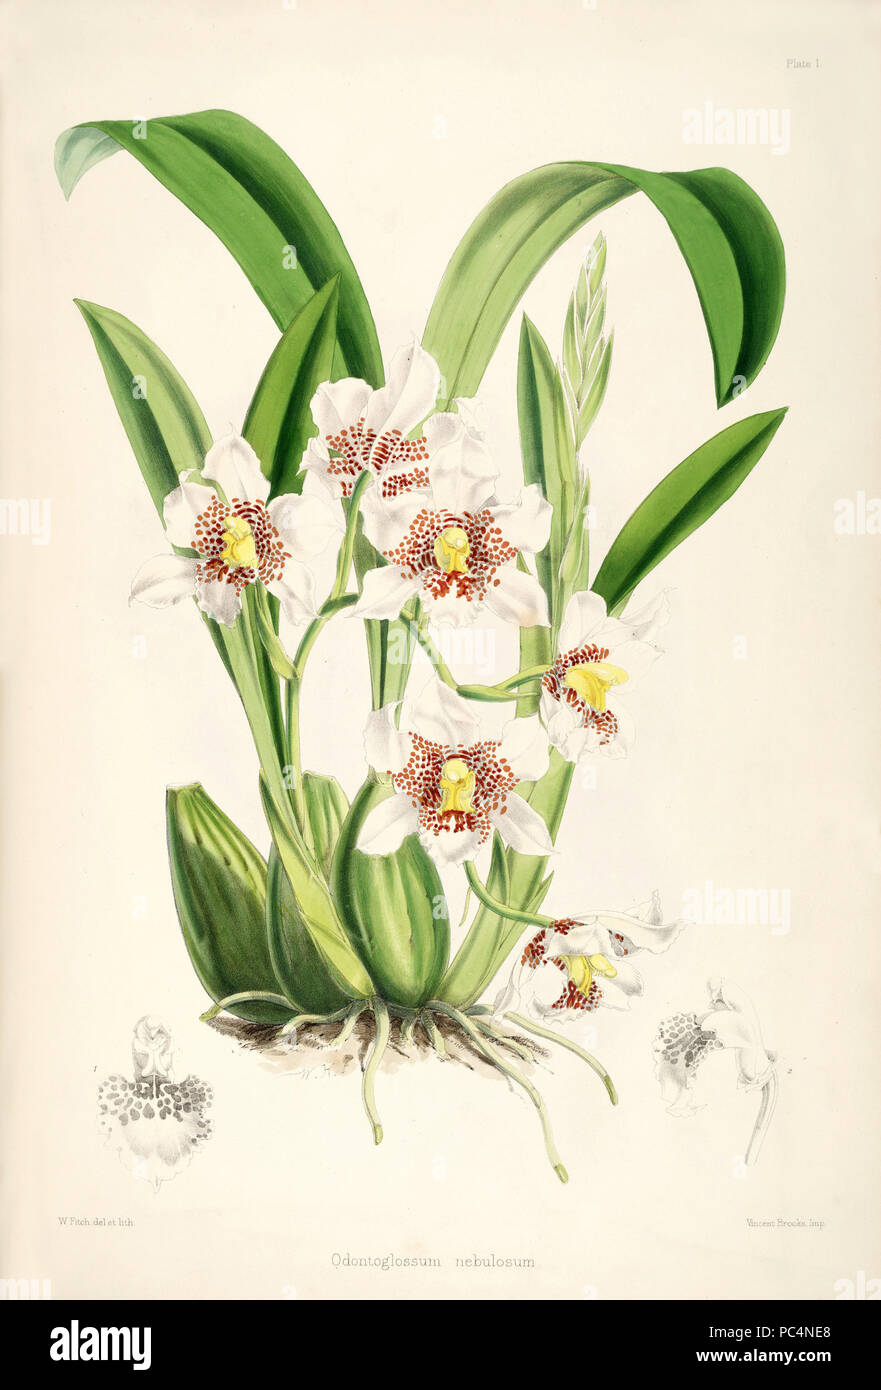 520 Rhynchostele aptera (as Odontoglossum nebulosum) - pl. 1 - Bateman - A Monograph of Odontoglossum Stock Photo